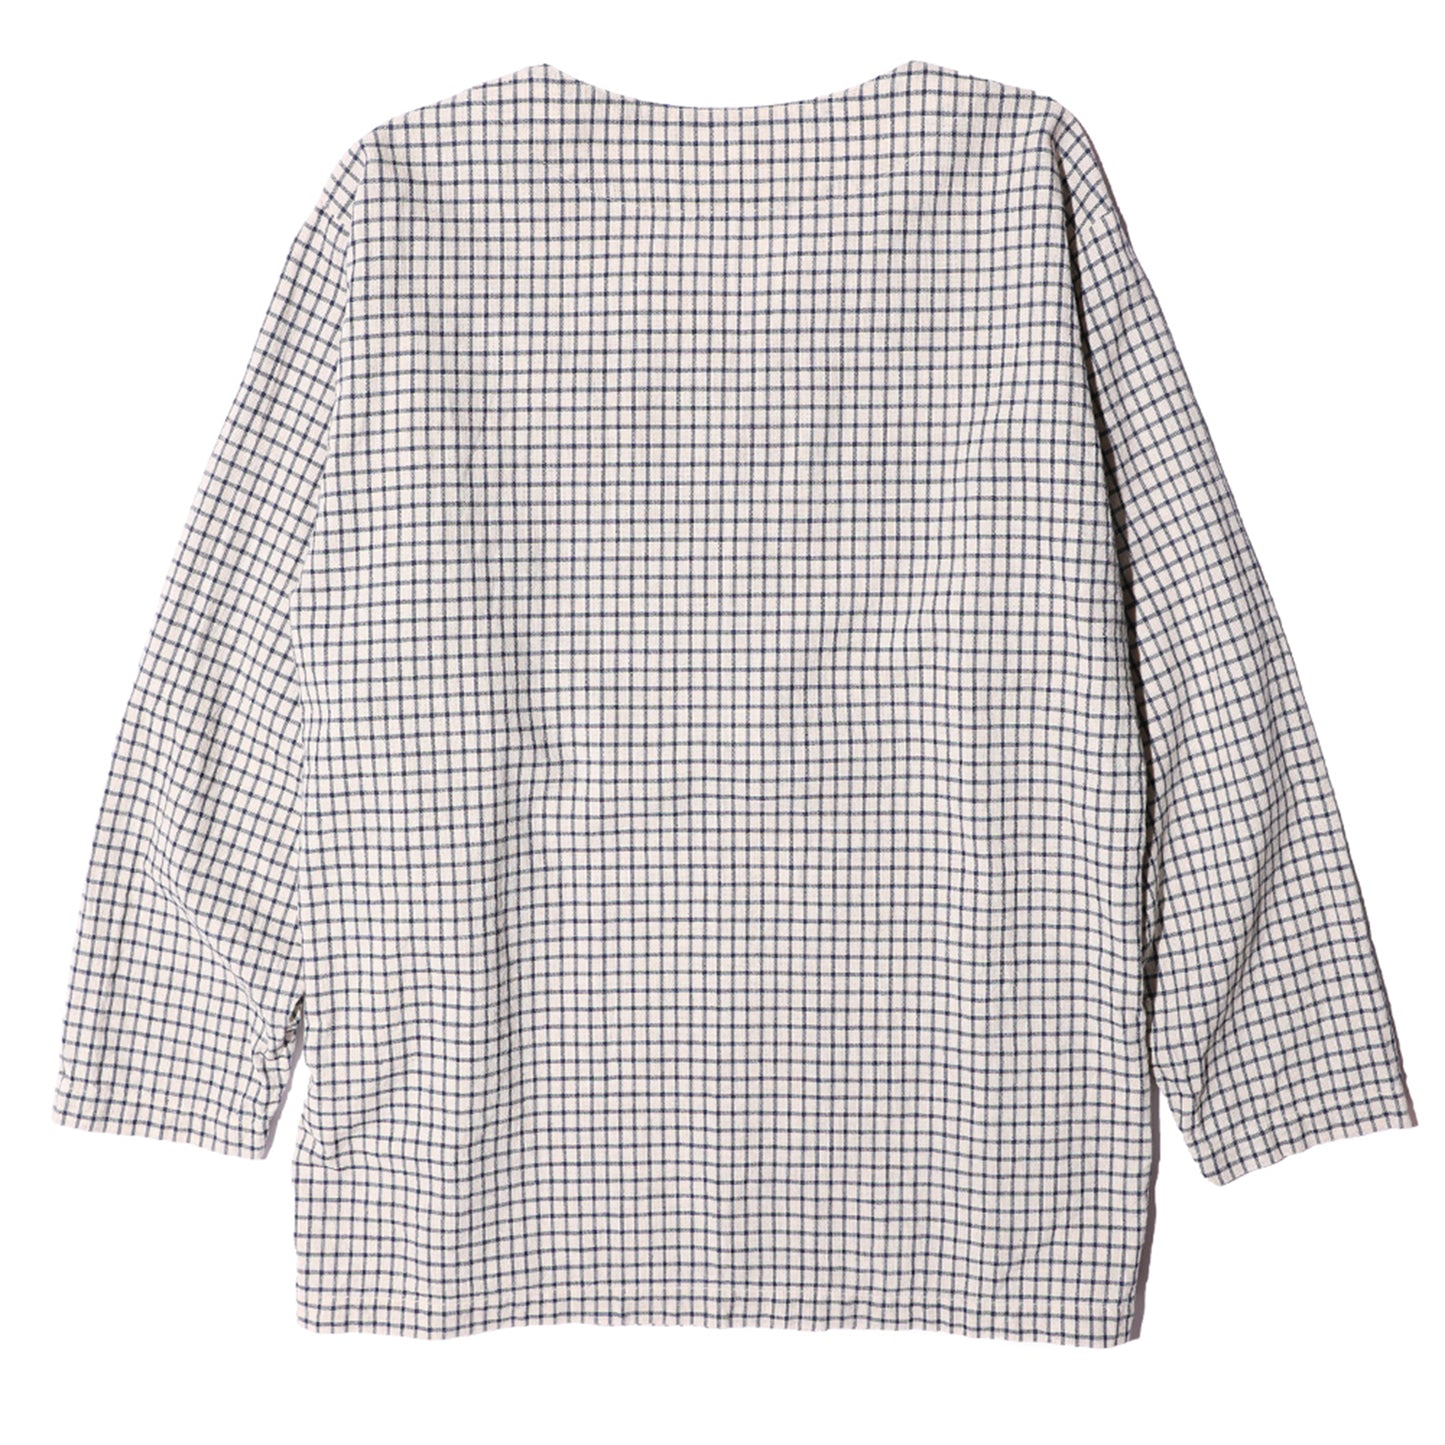 JELADO Sleeping shirt(スリーピングシャツ)【BL71109】